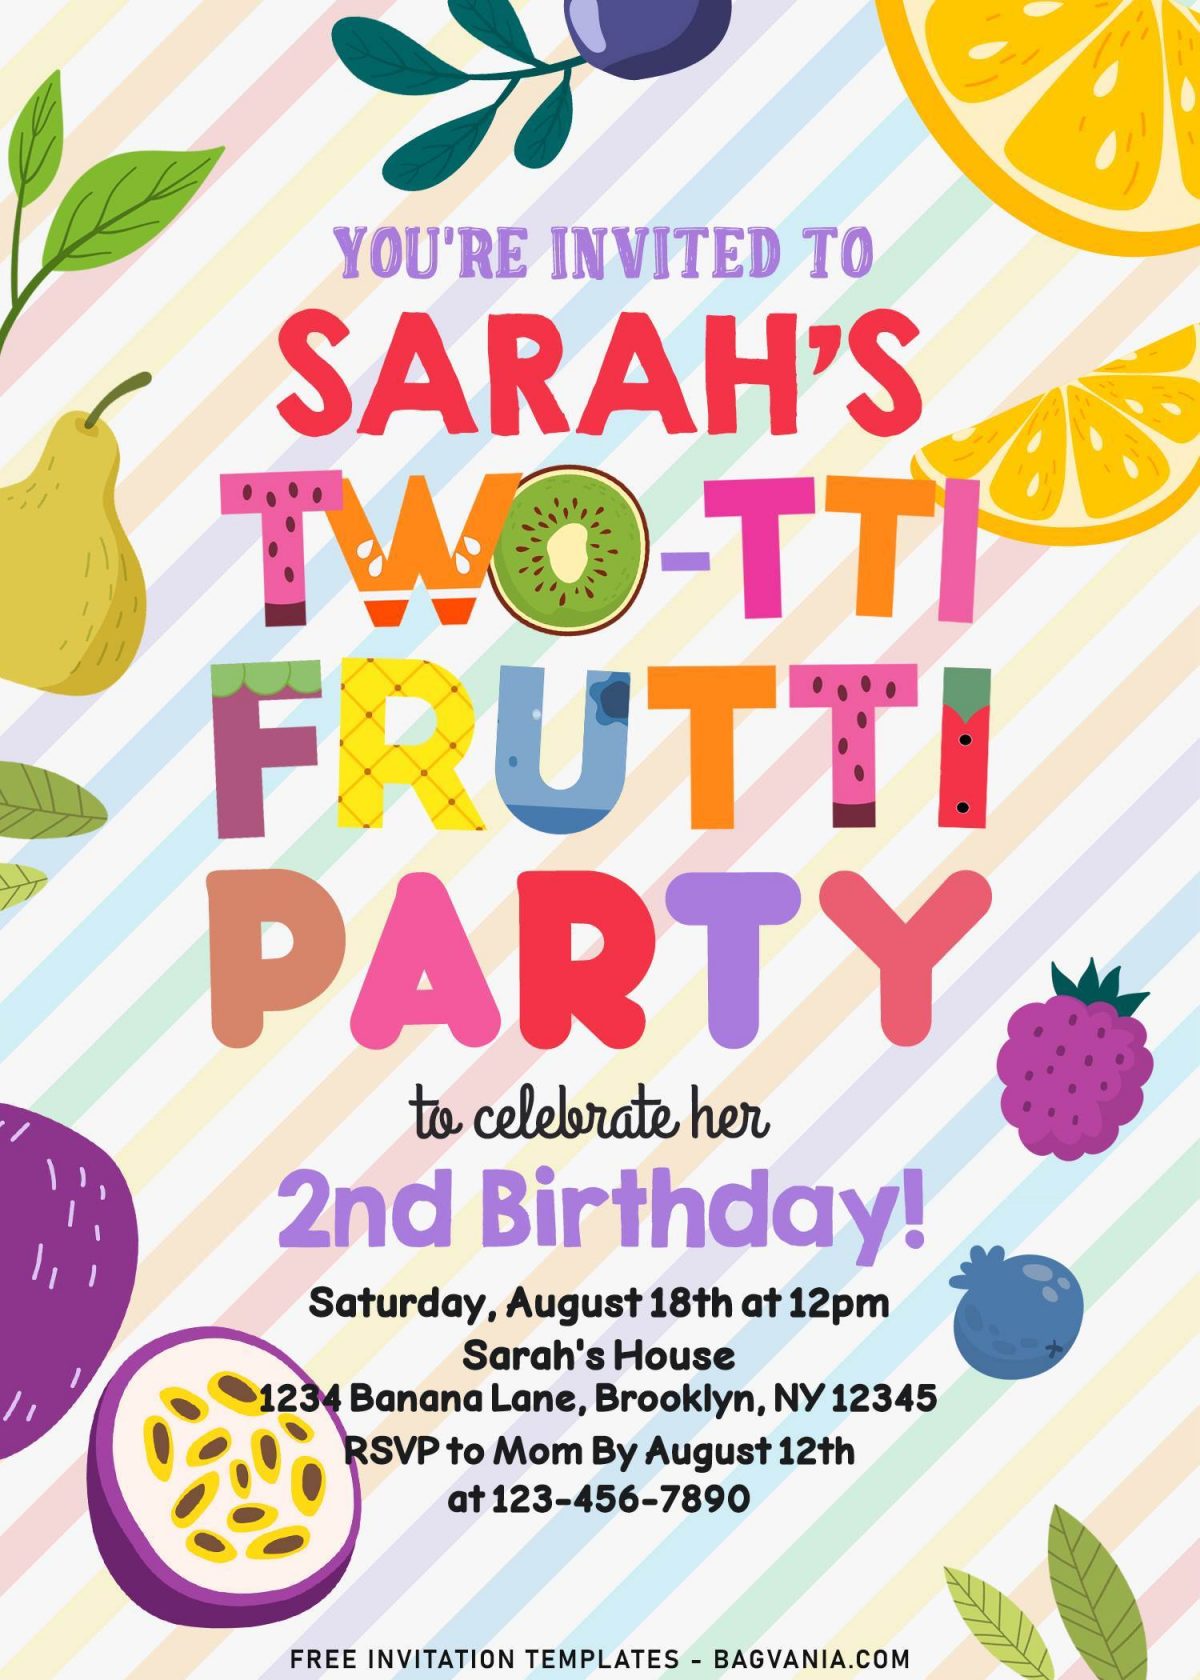 7+ Trendy And Fresh Two-tti Frutti 2nd Birthday Invitation Templates